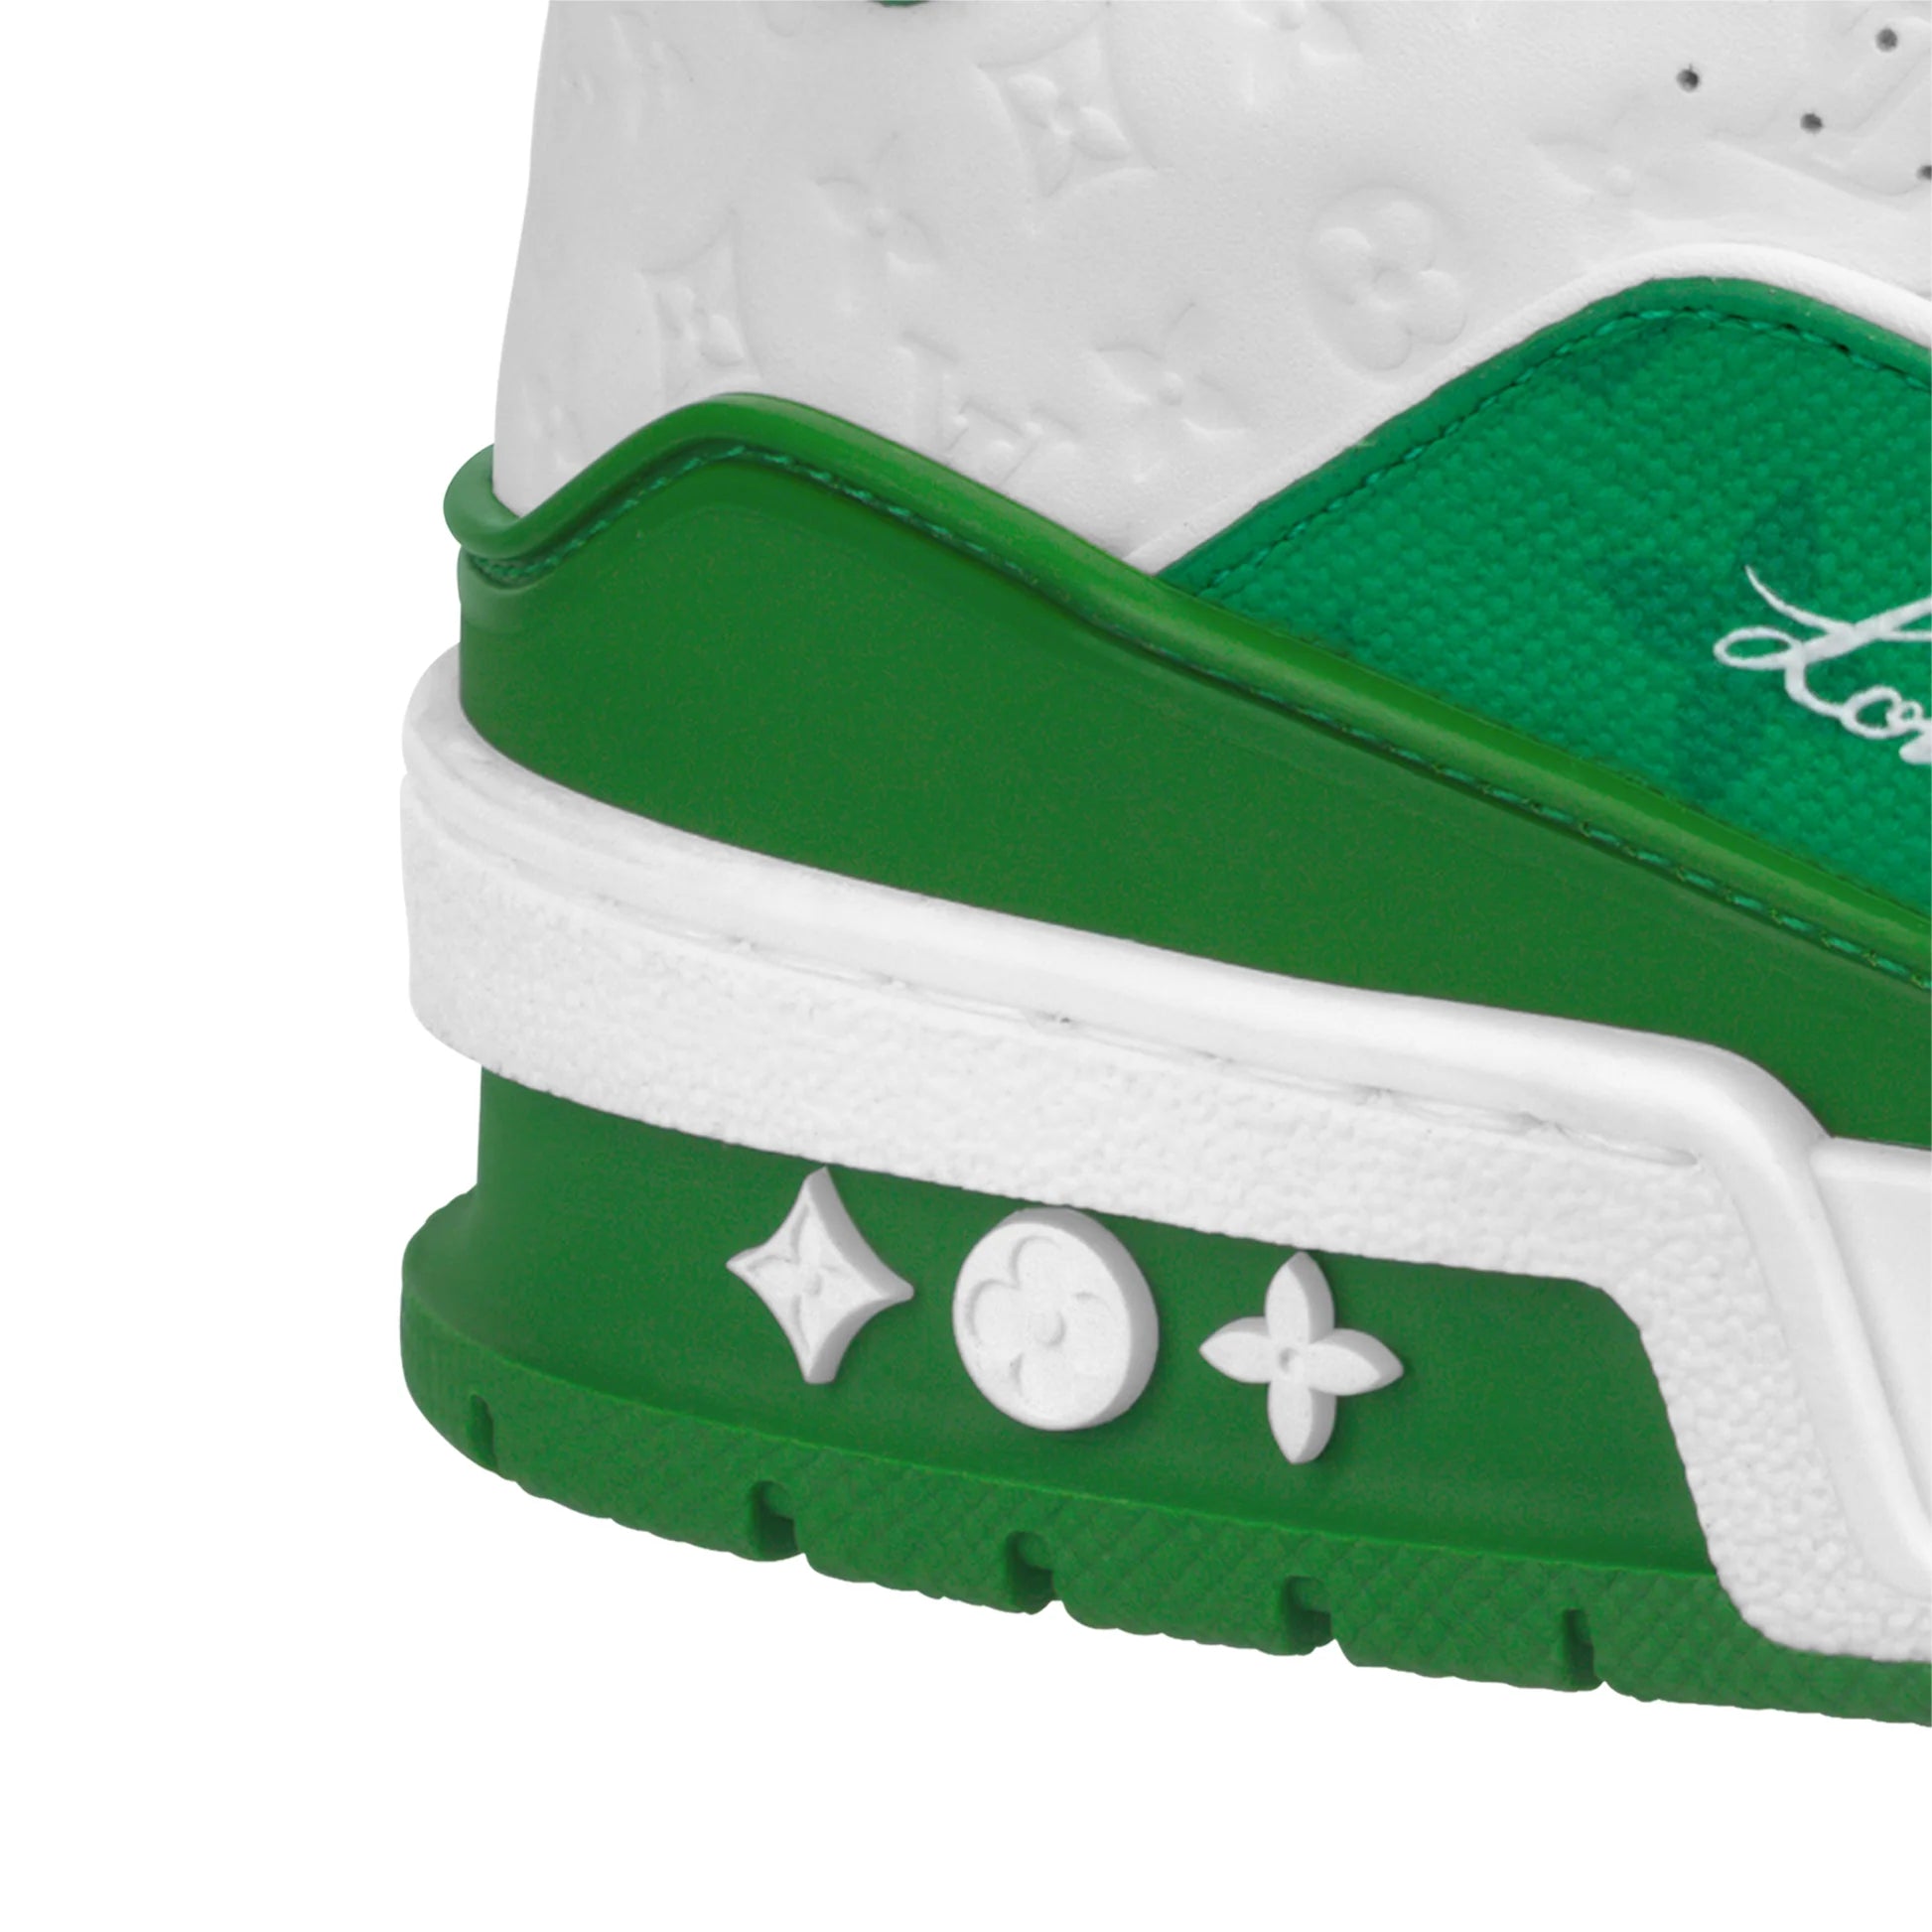 Louis Vuitton LV Trainer '54' White Green Sneaker